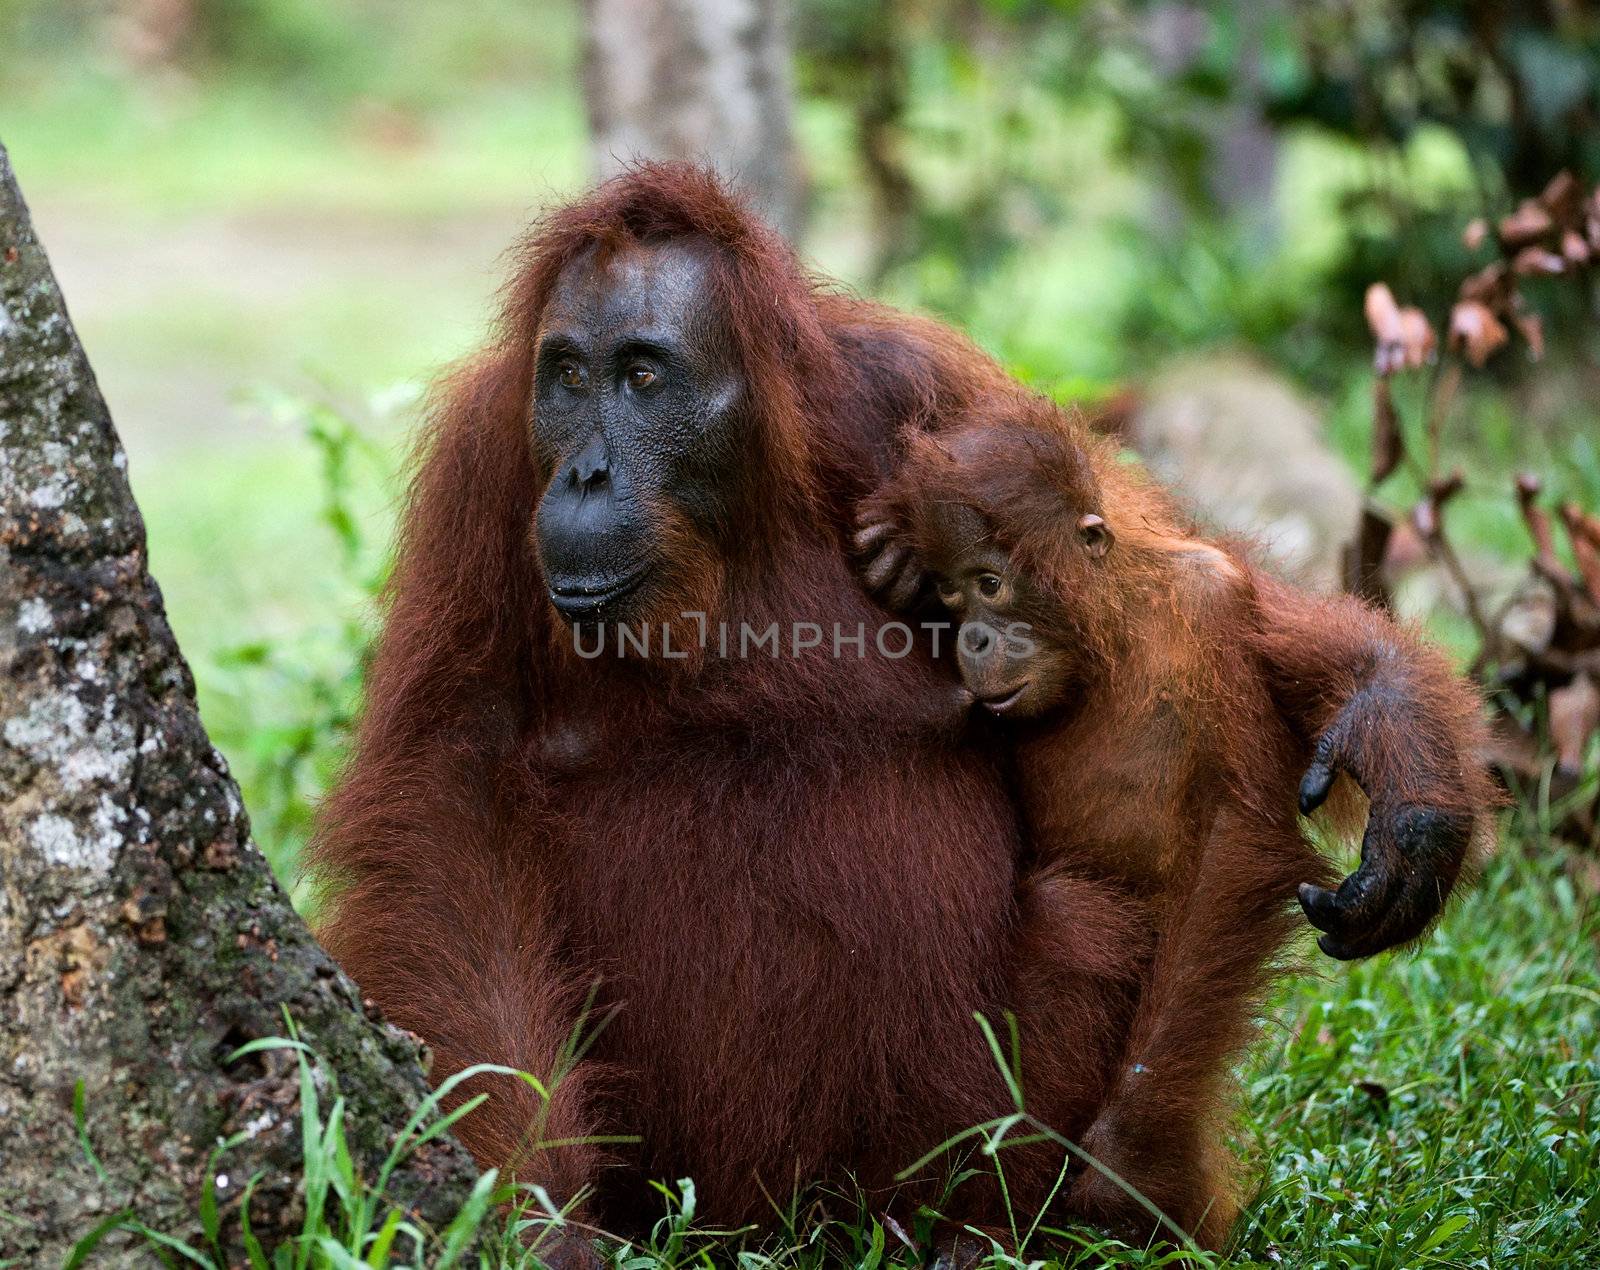 The orangutan Mum with a cub/ Indonesia.Borneo.Camp leakey.